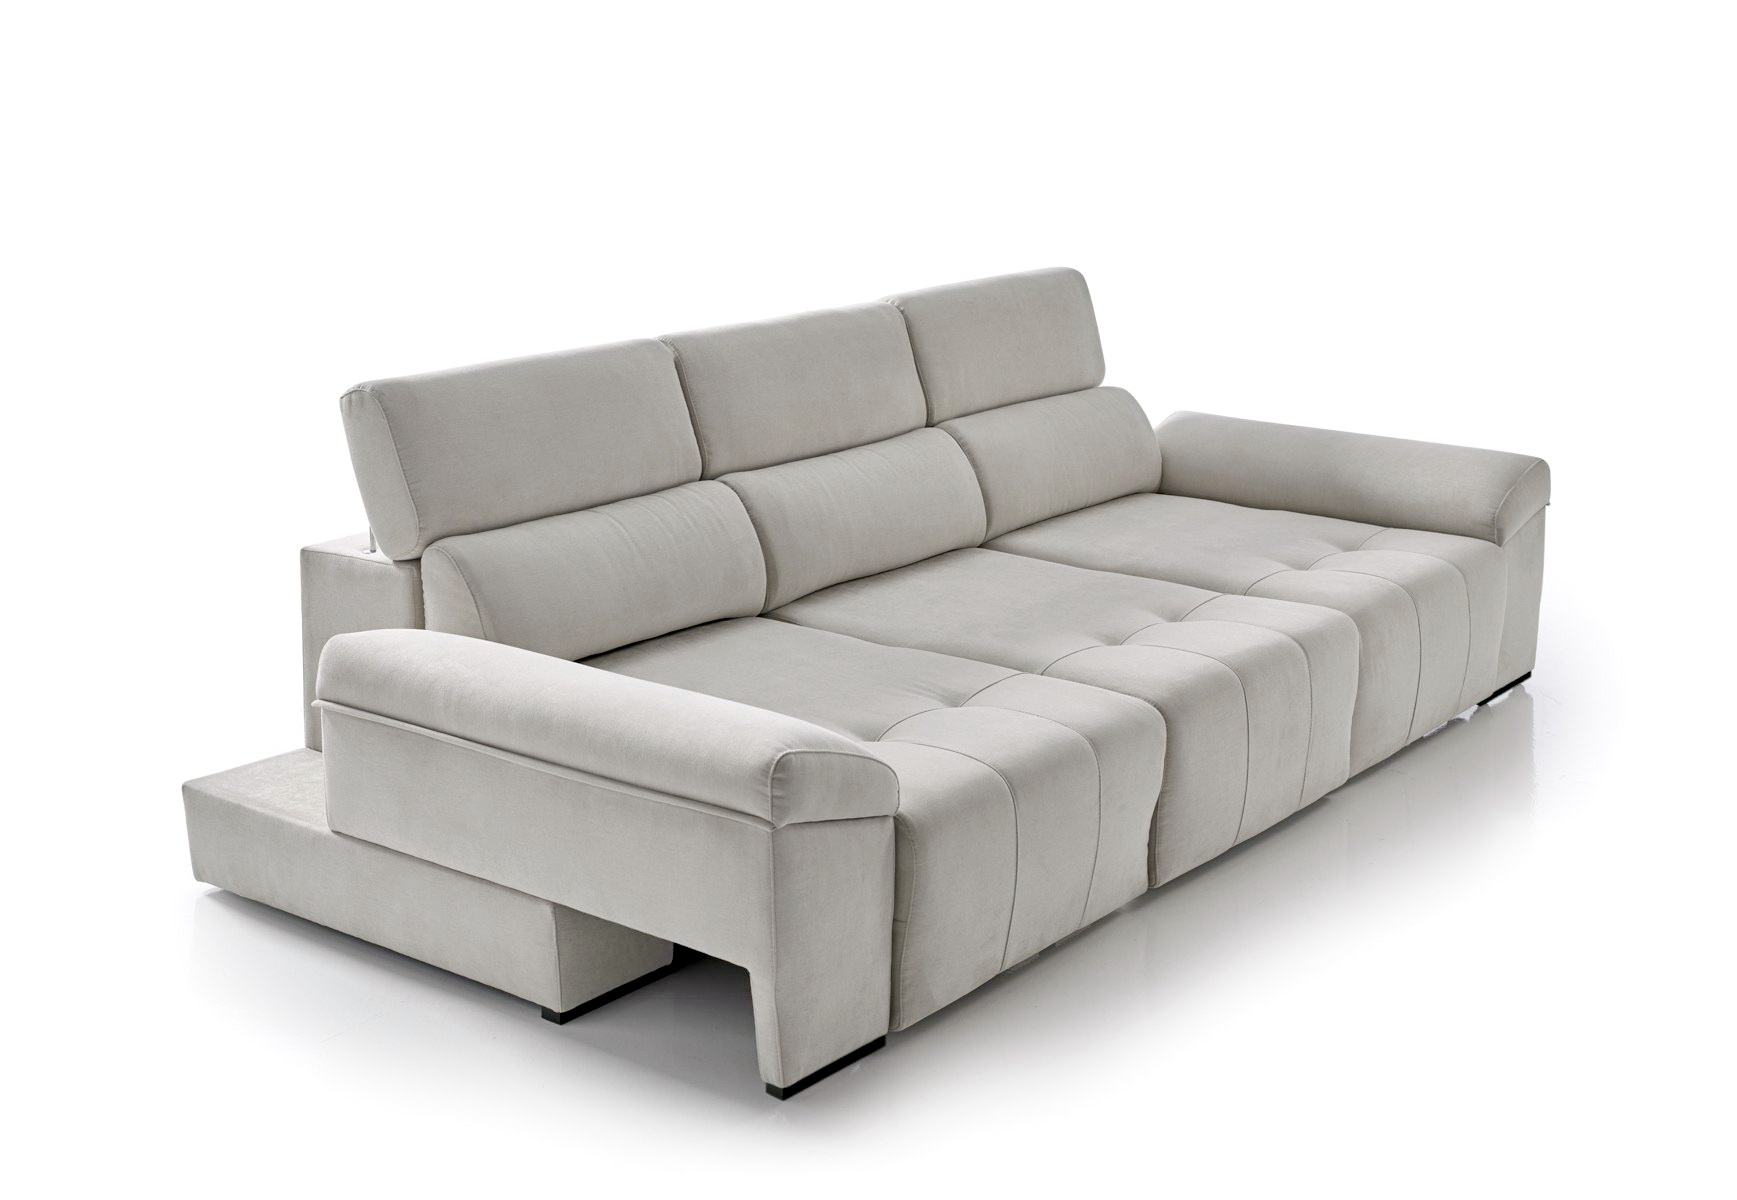 COKTEL 5 sofá modular transformable by Future Design Confort en muebles antoñán® León